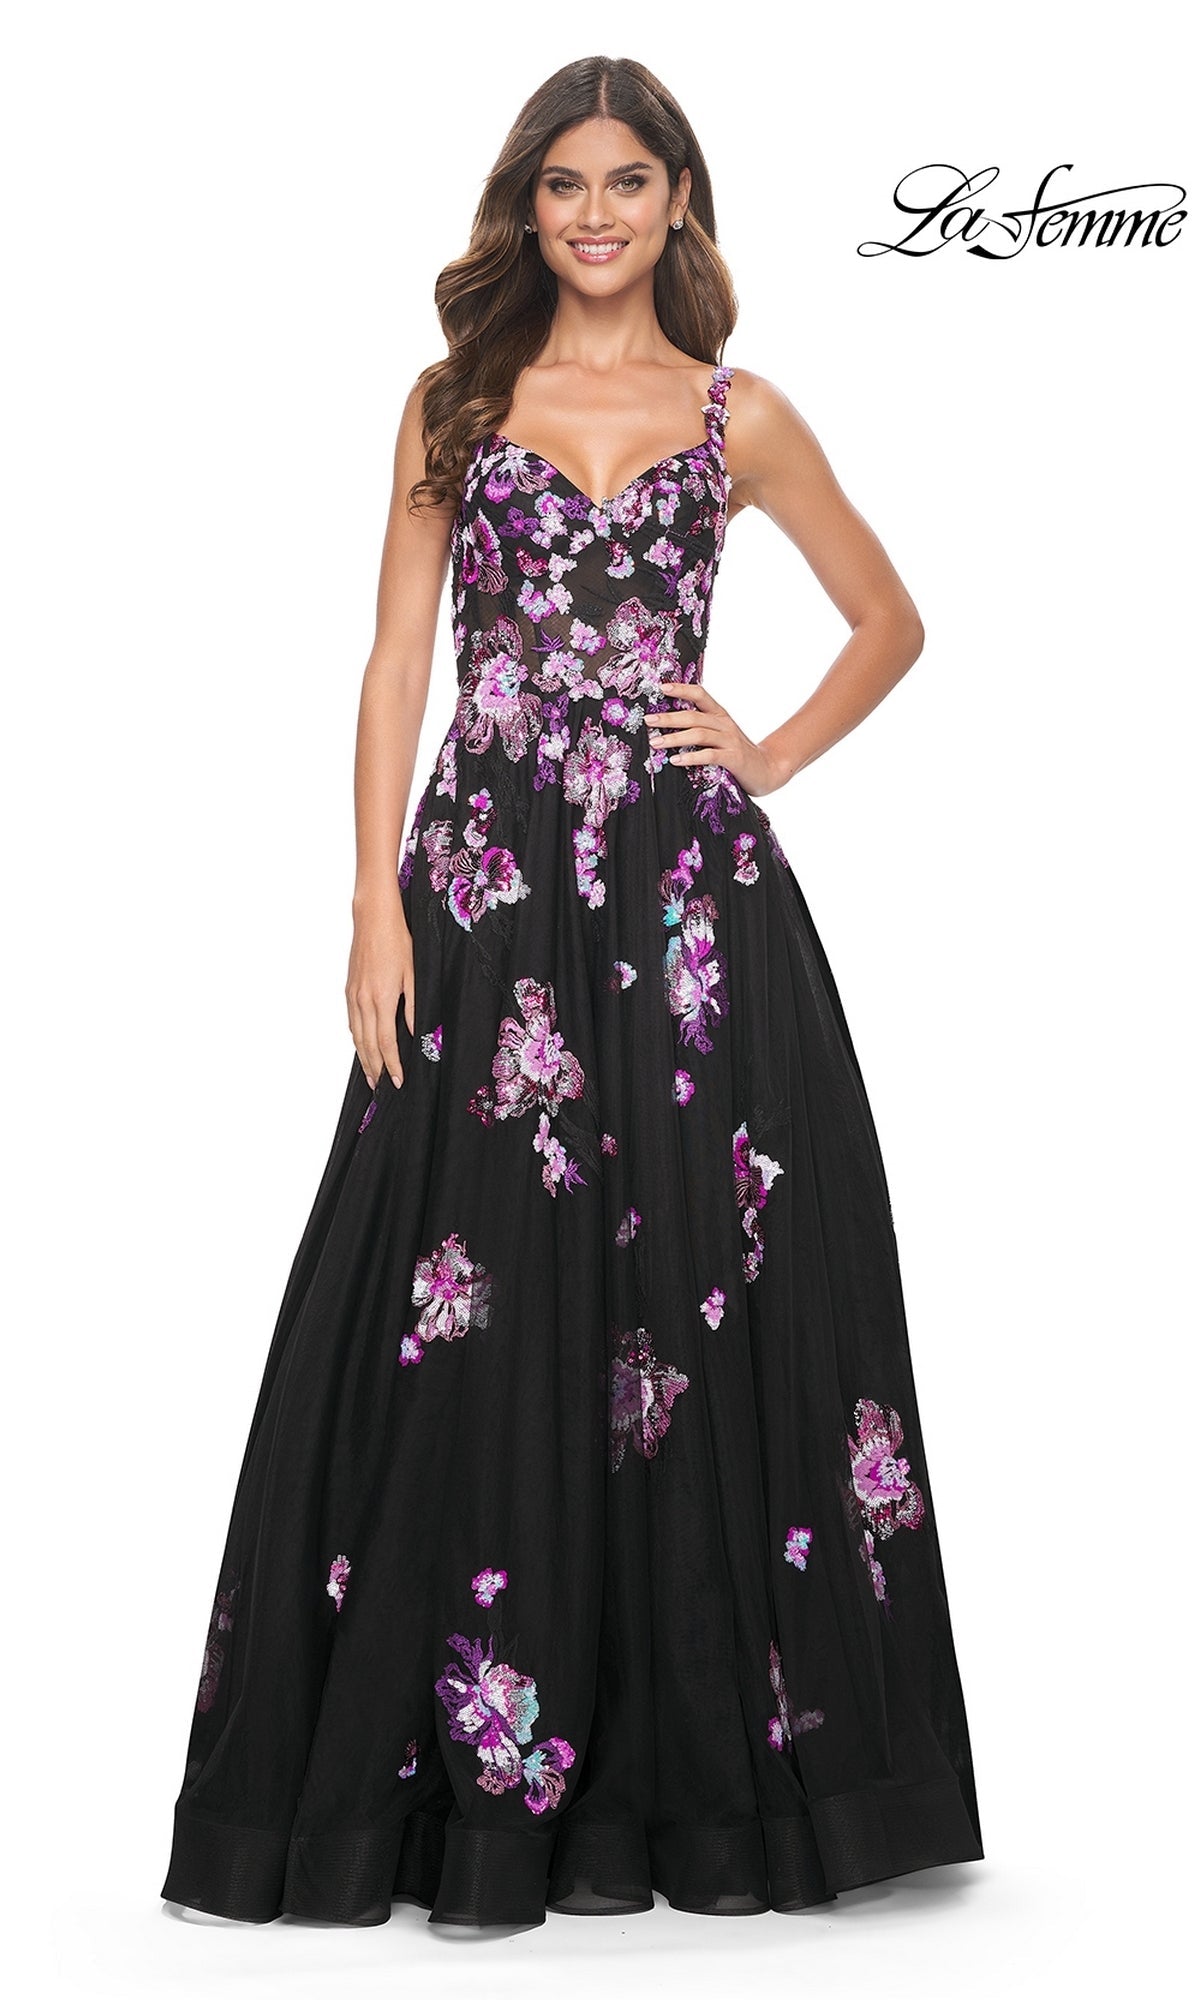  La Femme 32030 Formal Prom Dress